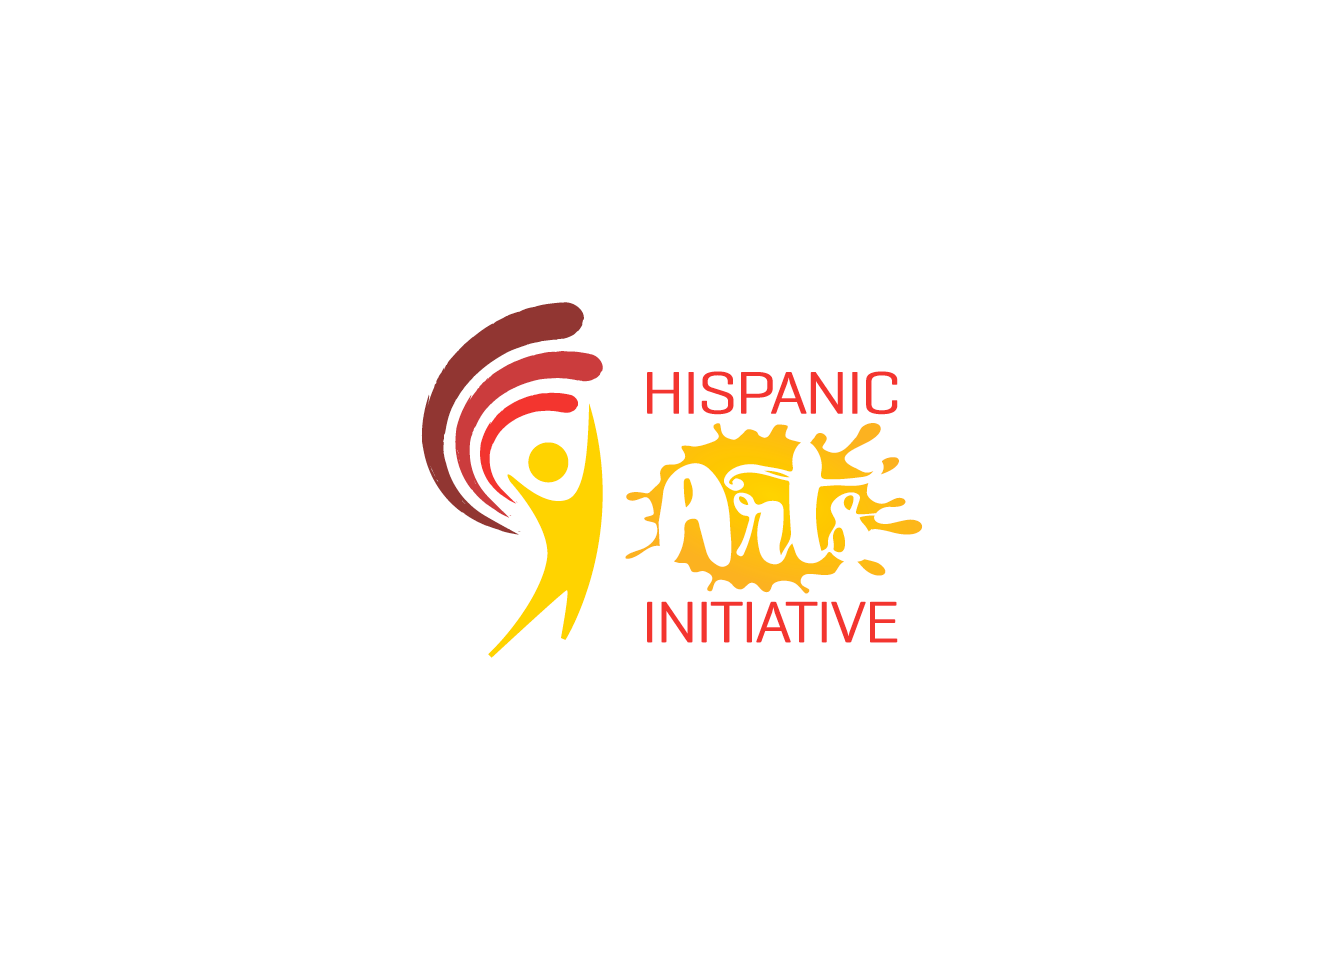 Hispanic Arts Initiative